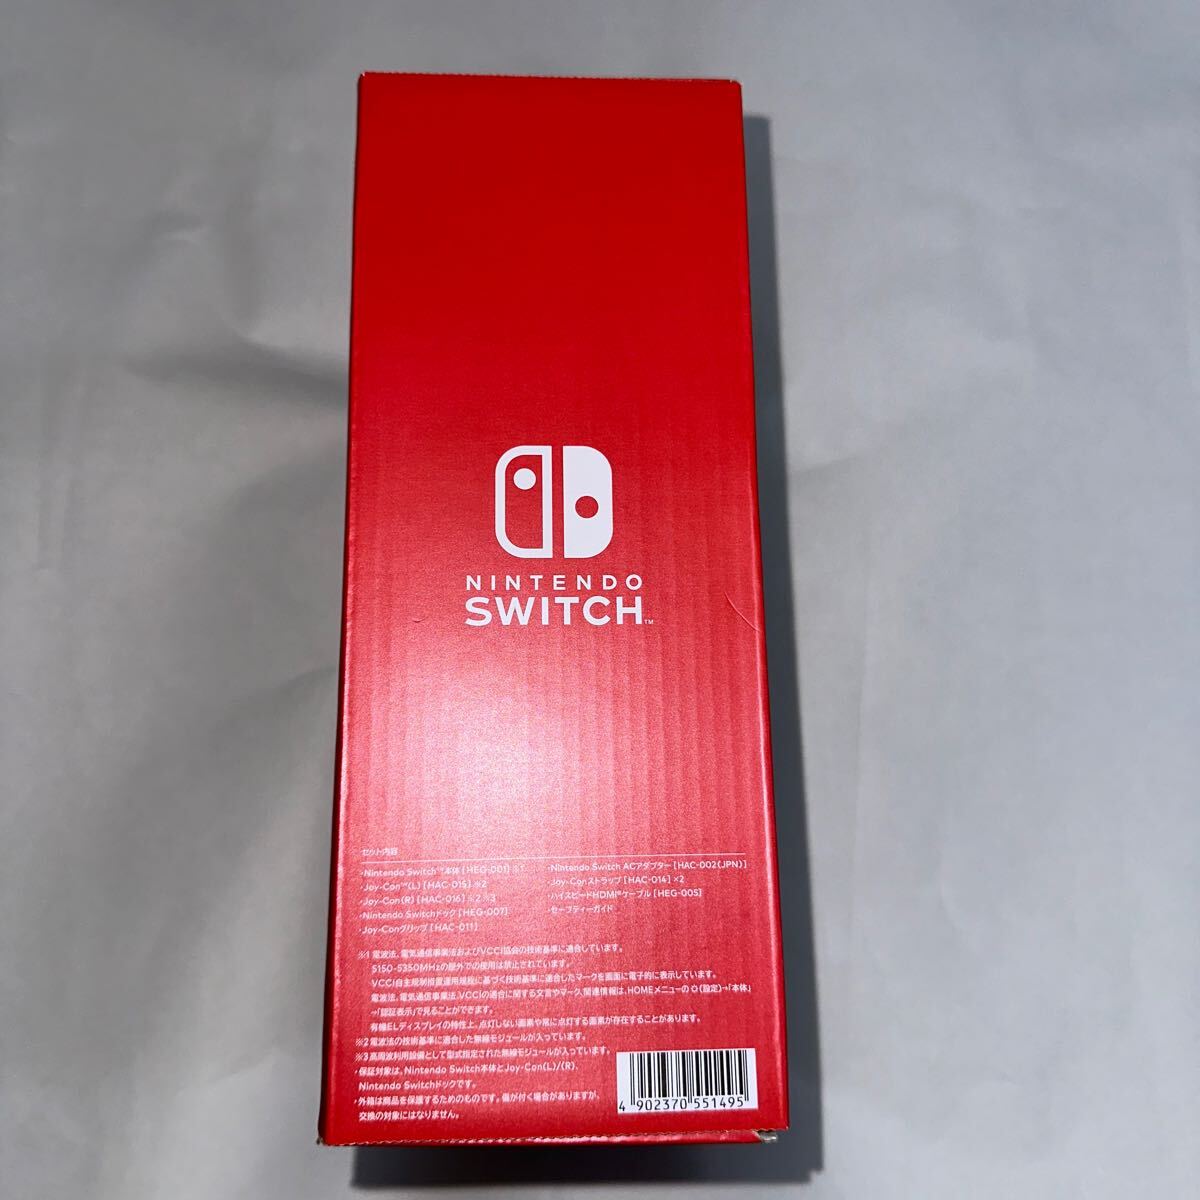 Nintendo Switch Nintendo switch body ( have machine EL model ) Mario red [ new goods * unopened ] free shipping 1 jpy start nintendo 